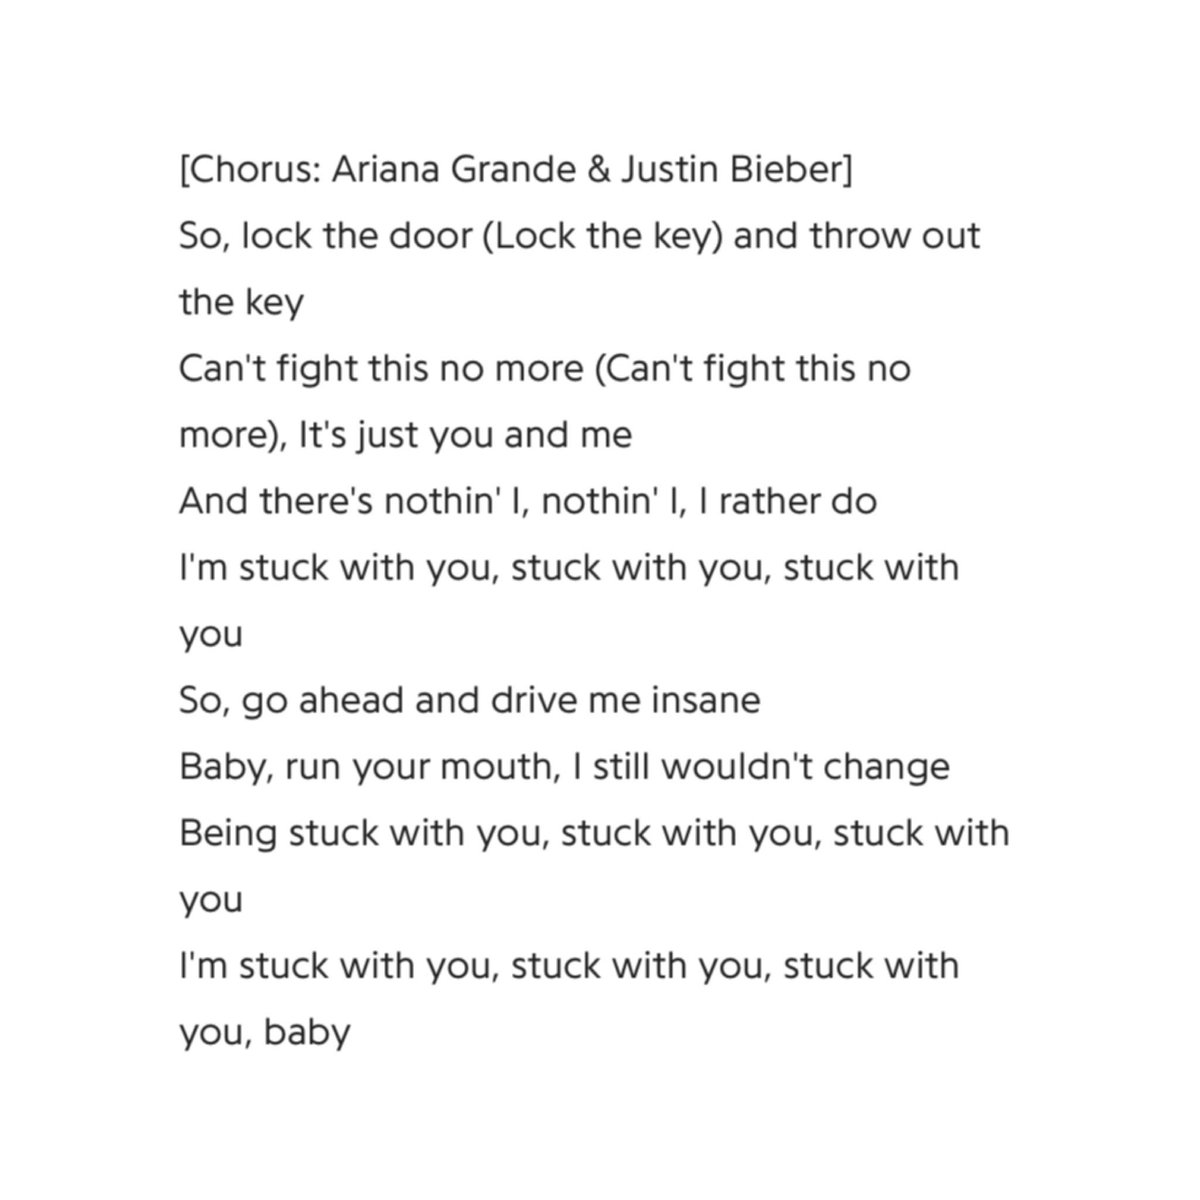 Justin Bieber News on X: Check out the lyrics for #STUCKWITHU